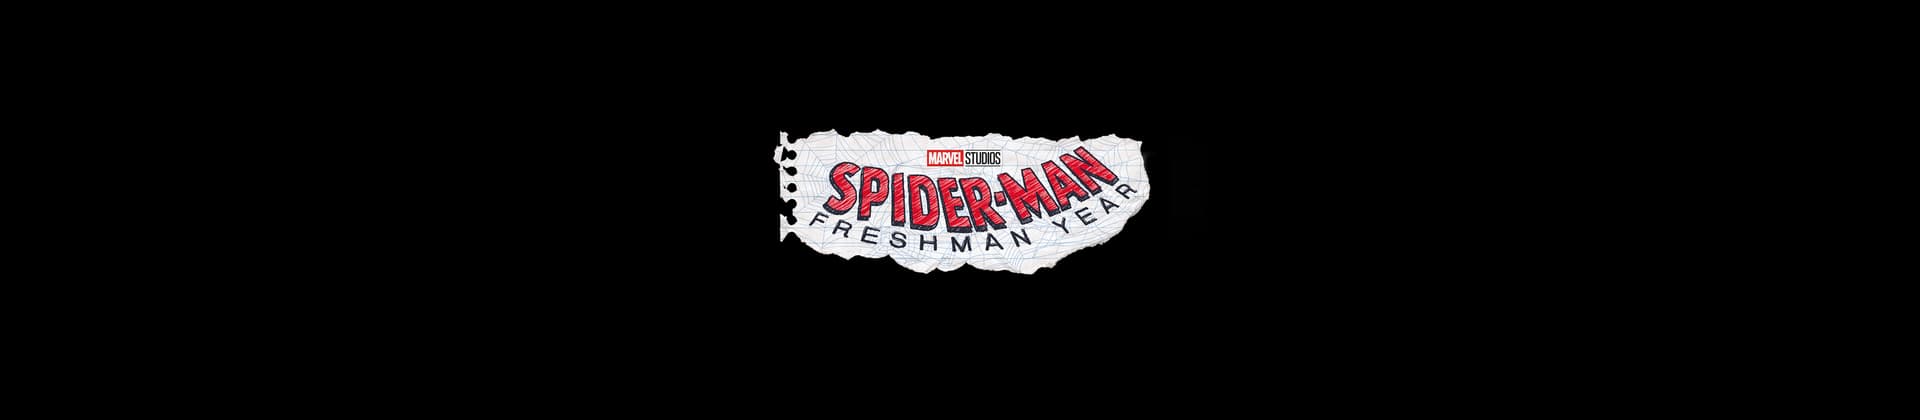 Marvel Studios' Spider-Man: Freshman Year Disney+ Plus TV Show Season 1 Logo on Black